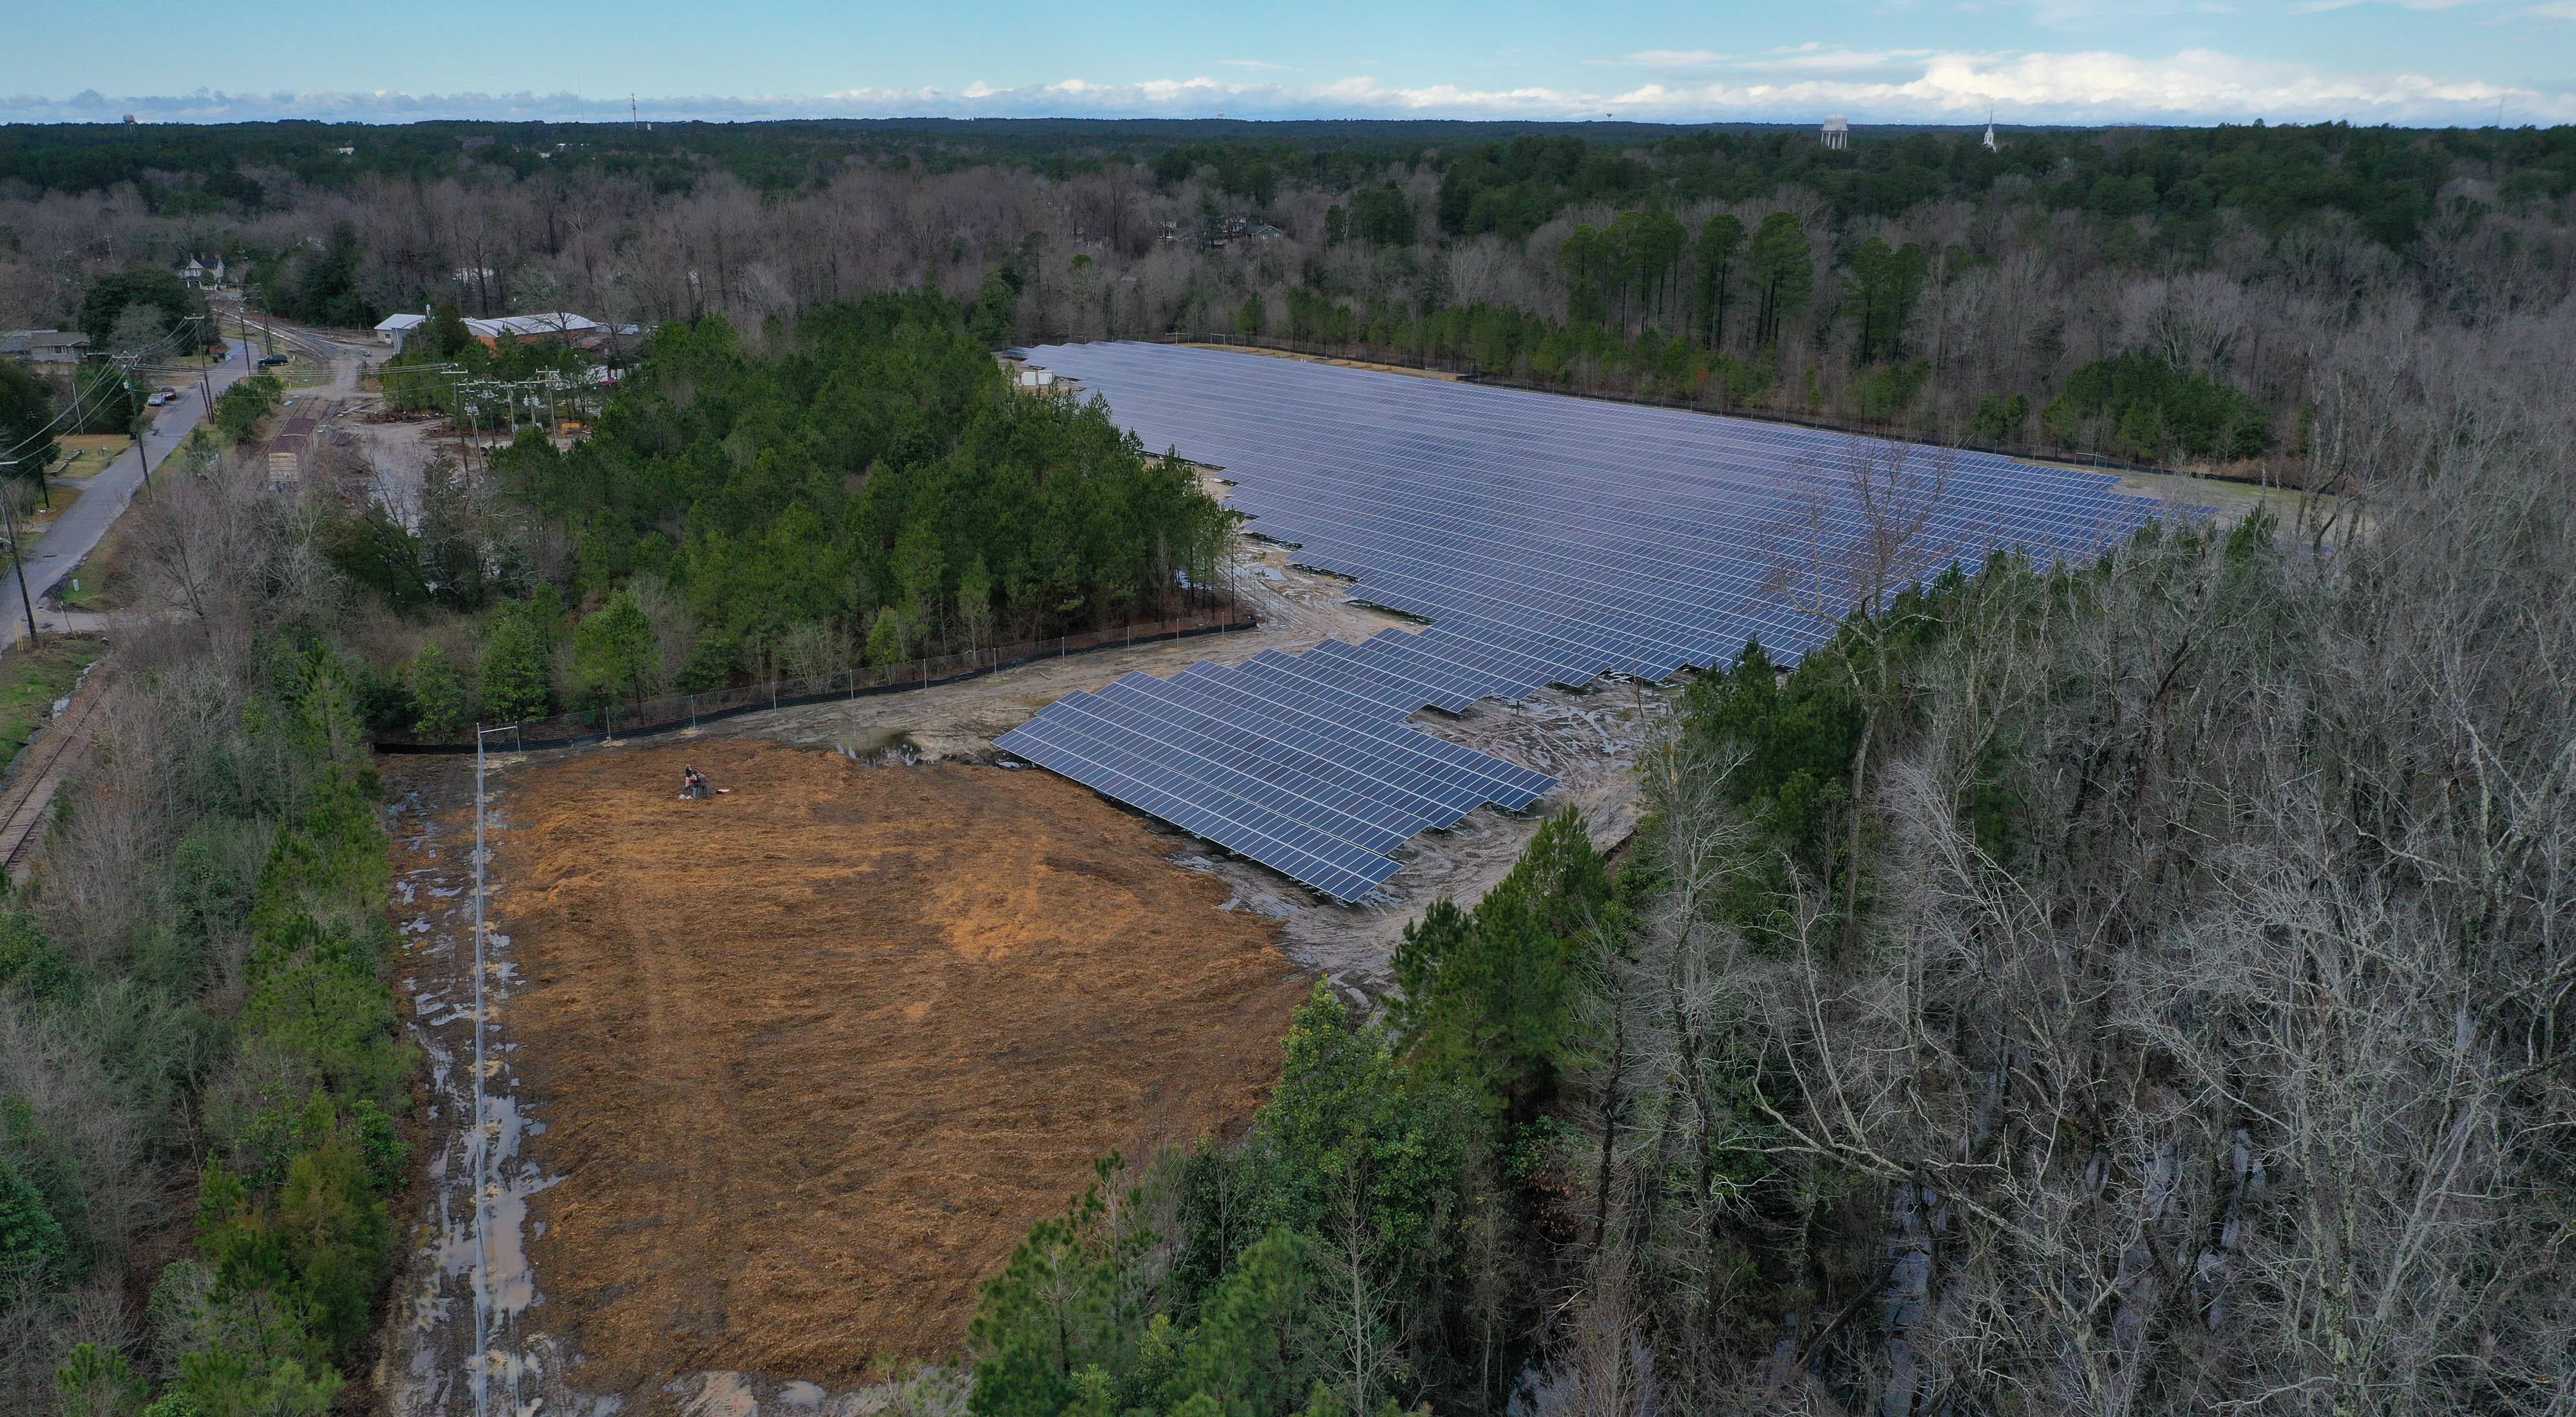 Drone shot of a solar farm near Elon, North Carolina